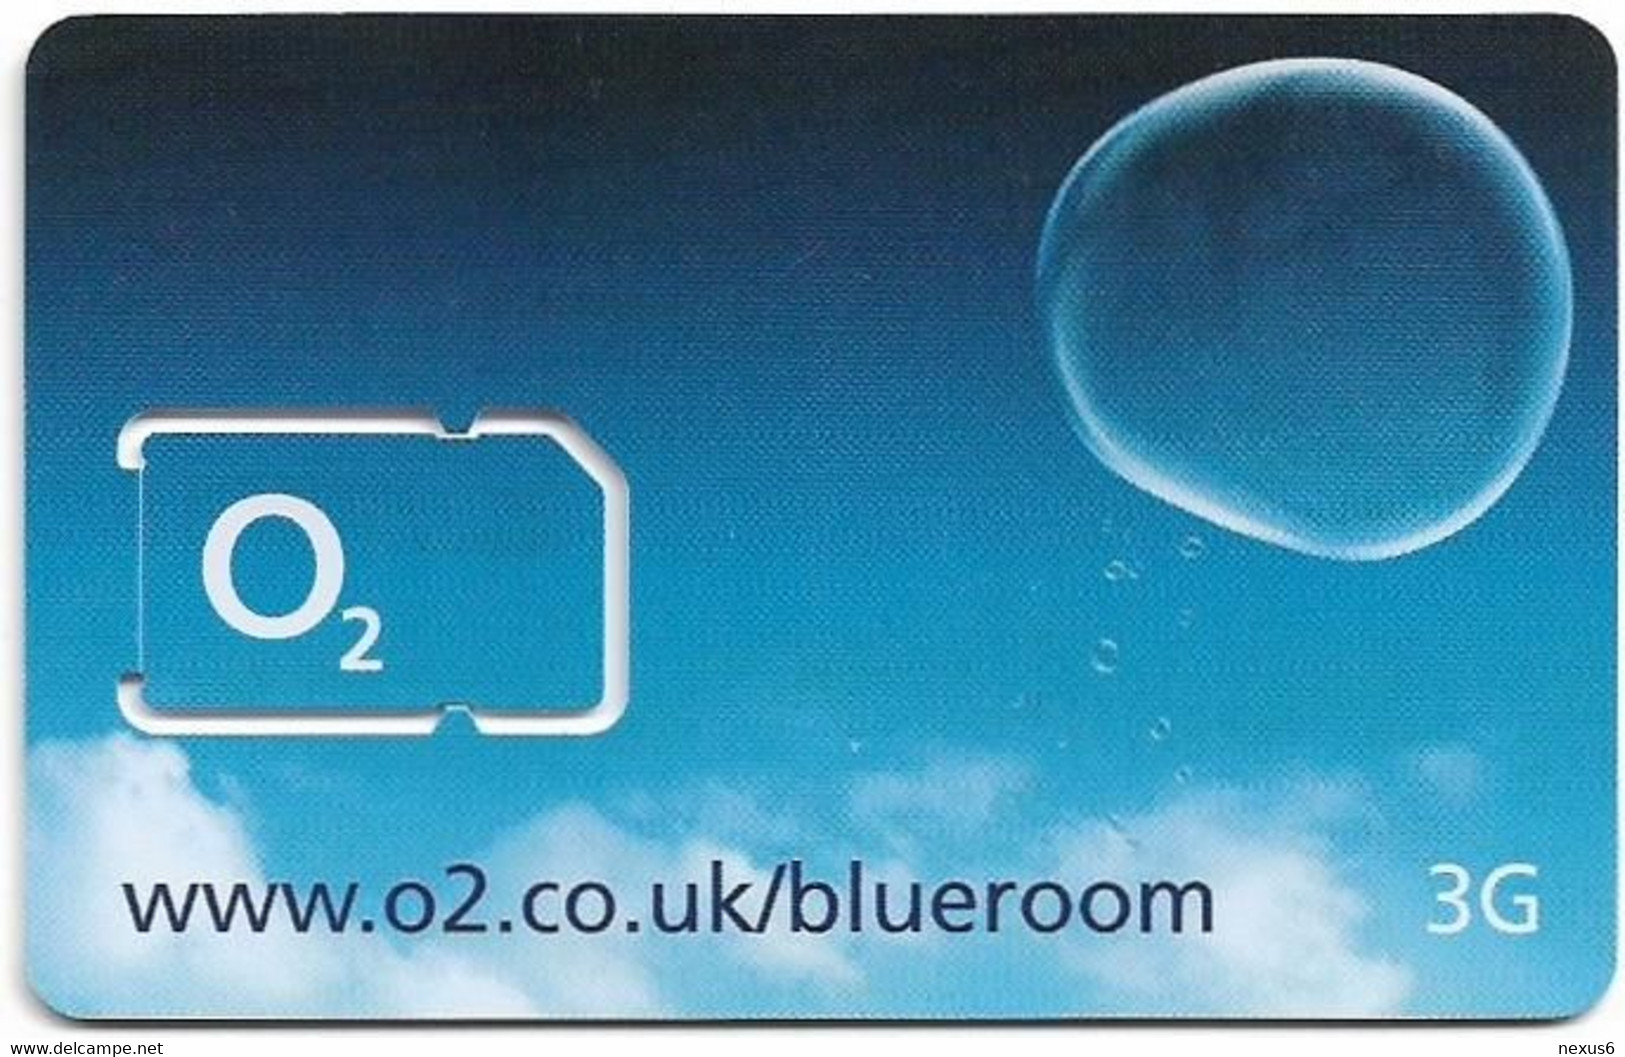 UK - O2 - Blueroom 3G #1 - GSM SIM2 Mini, Mint - [ 8] Companies Issues